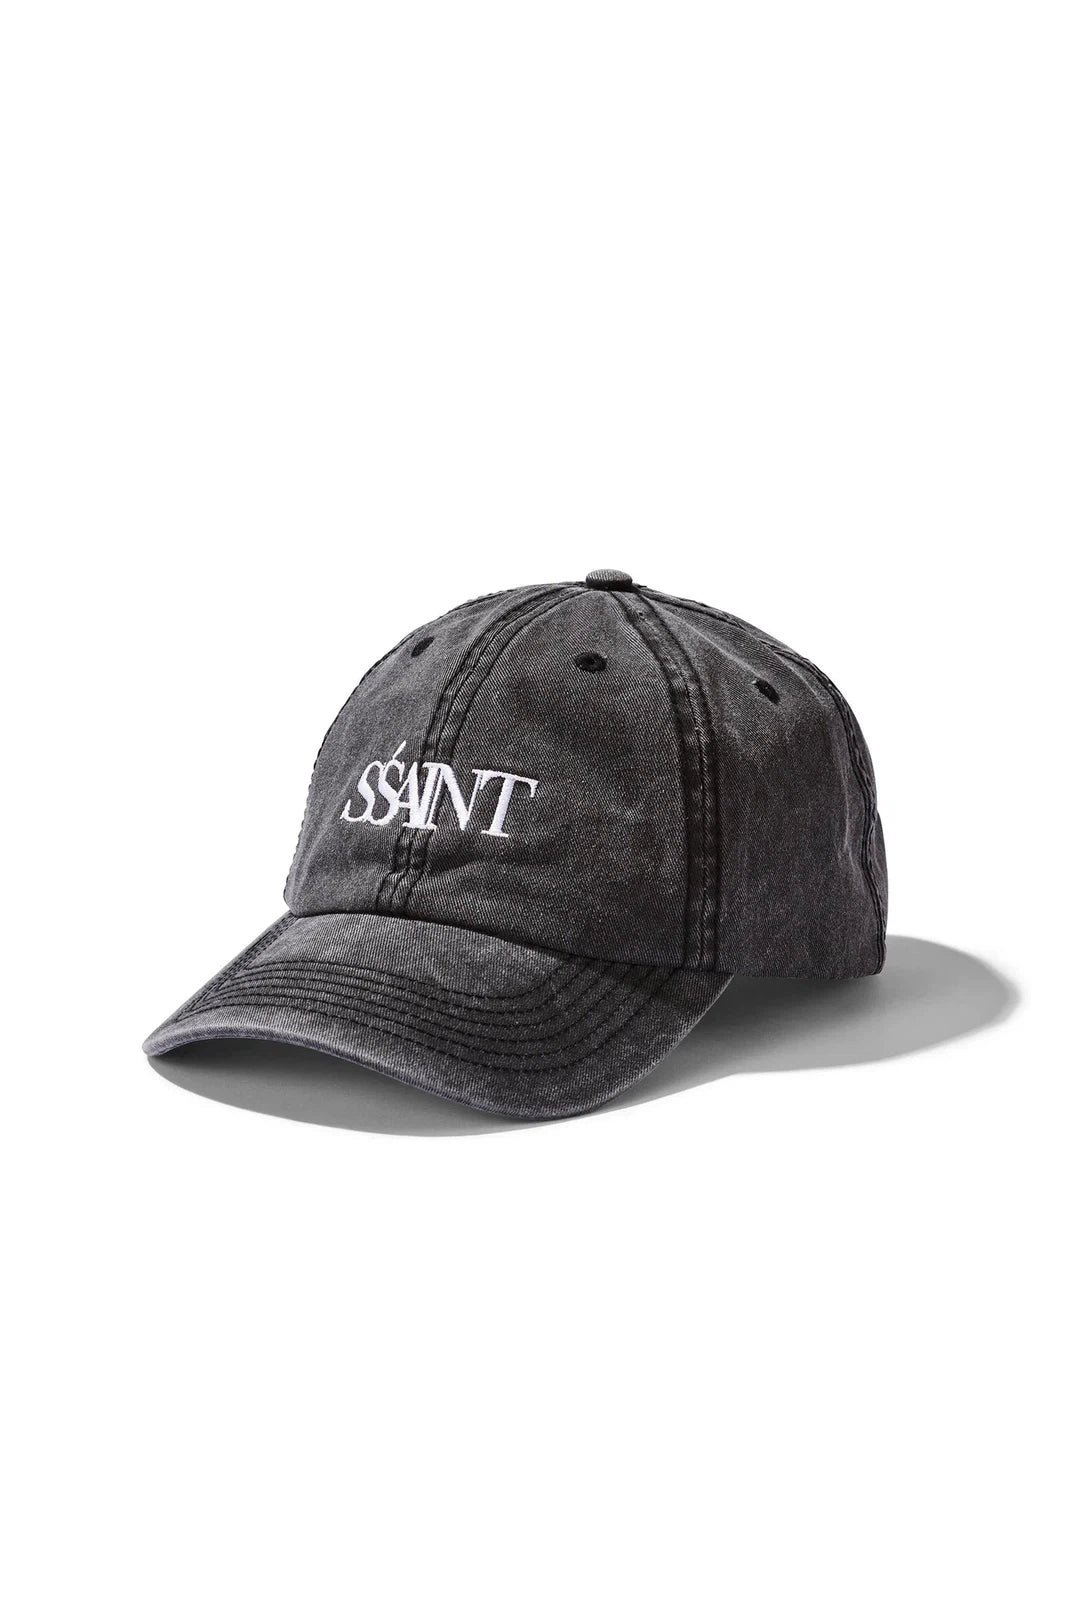 SSAINT cap, washed black